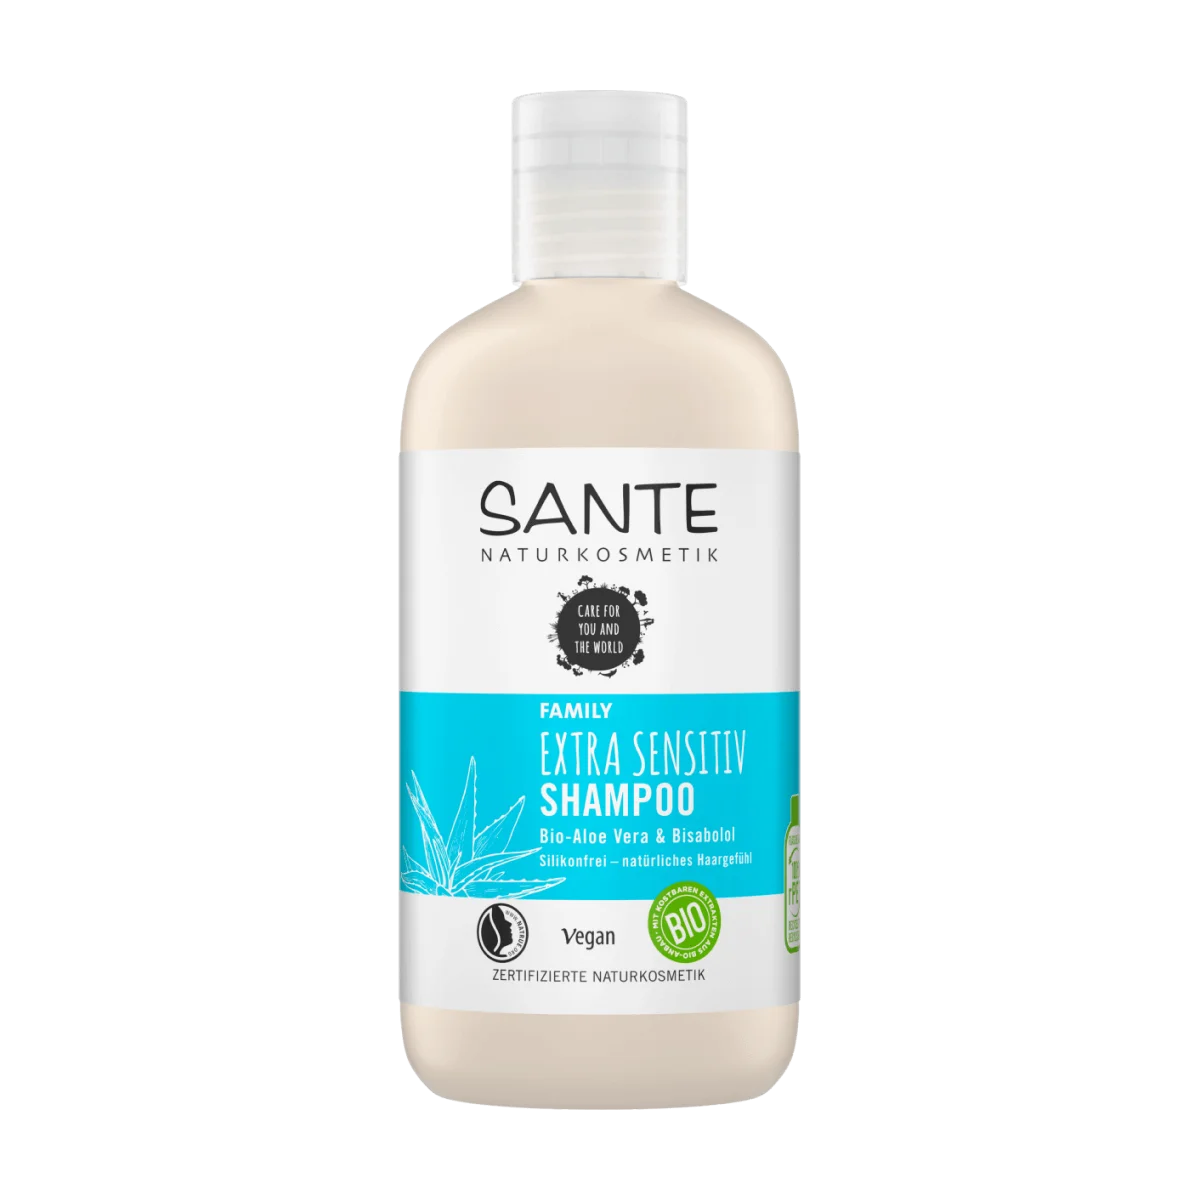 SANTE NATURKOSMETIK TP102422 250 Extra Shampoo Family & | Bisabolol, Bio-Aloe ml Sensitiv Vera